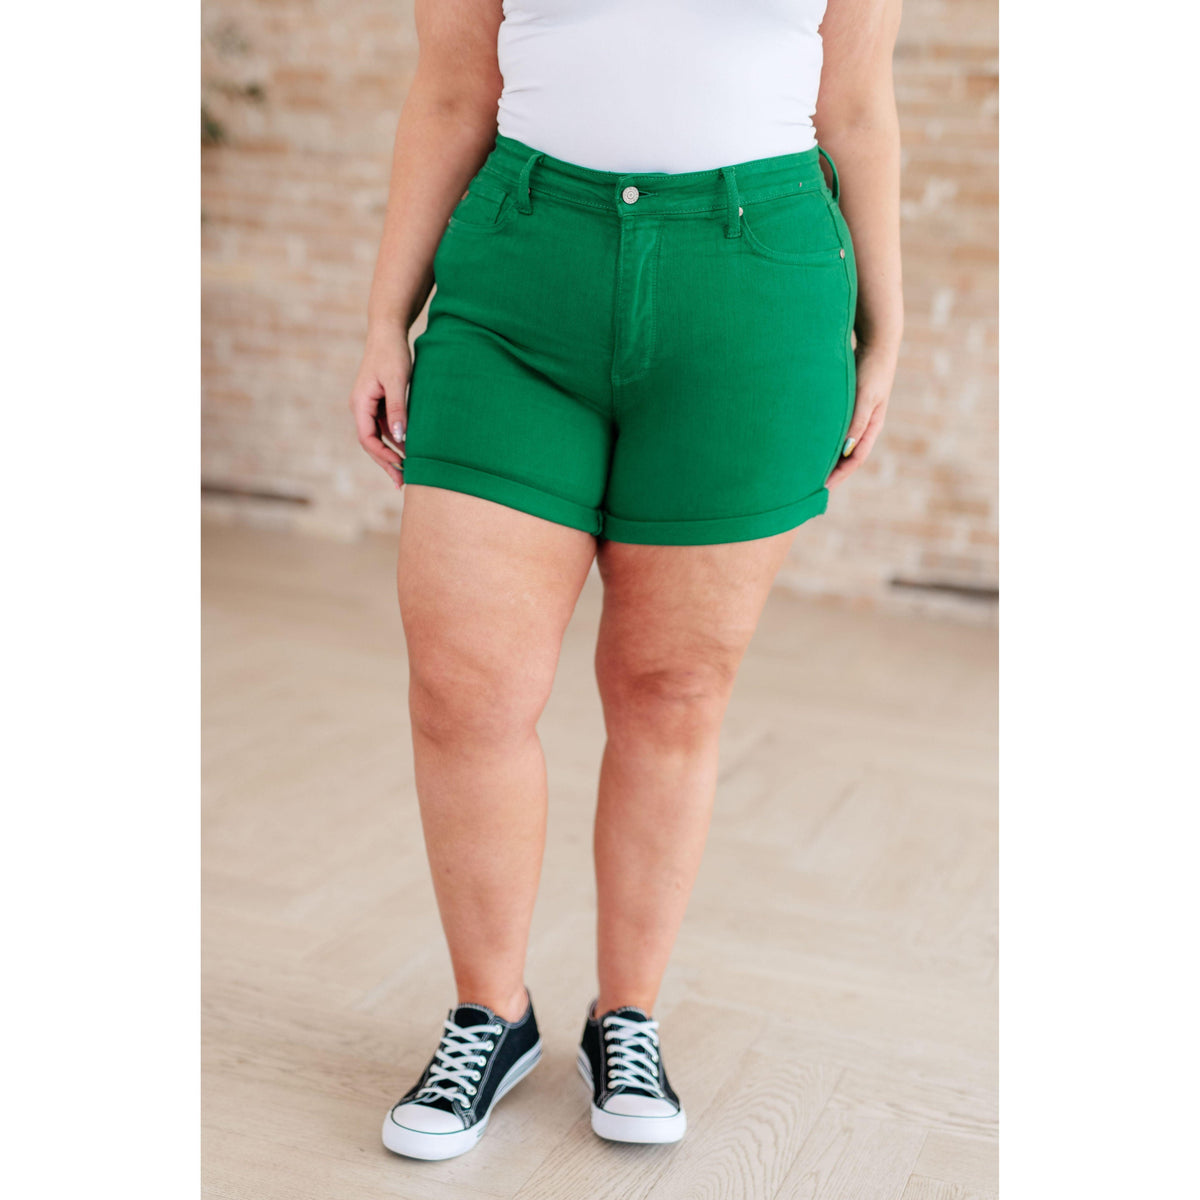 Judy Blue | Jenna High Rise Control Top Cuffed Shorts in Green - becauseofadi